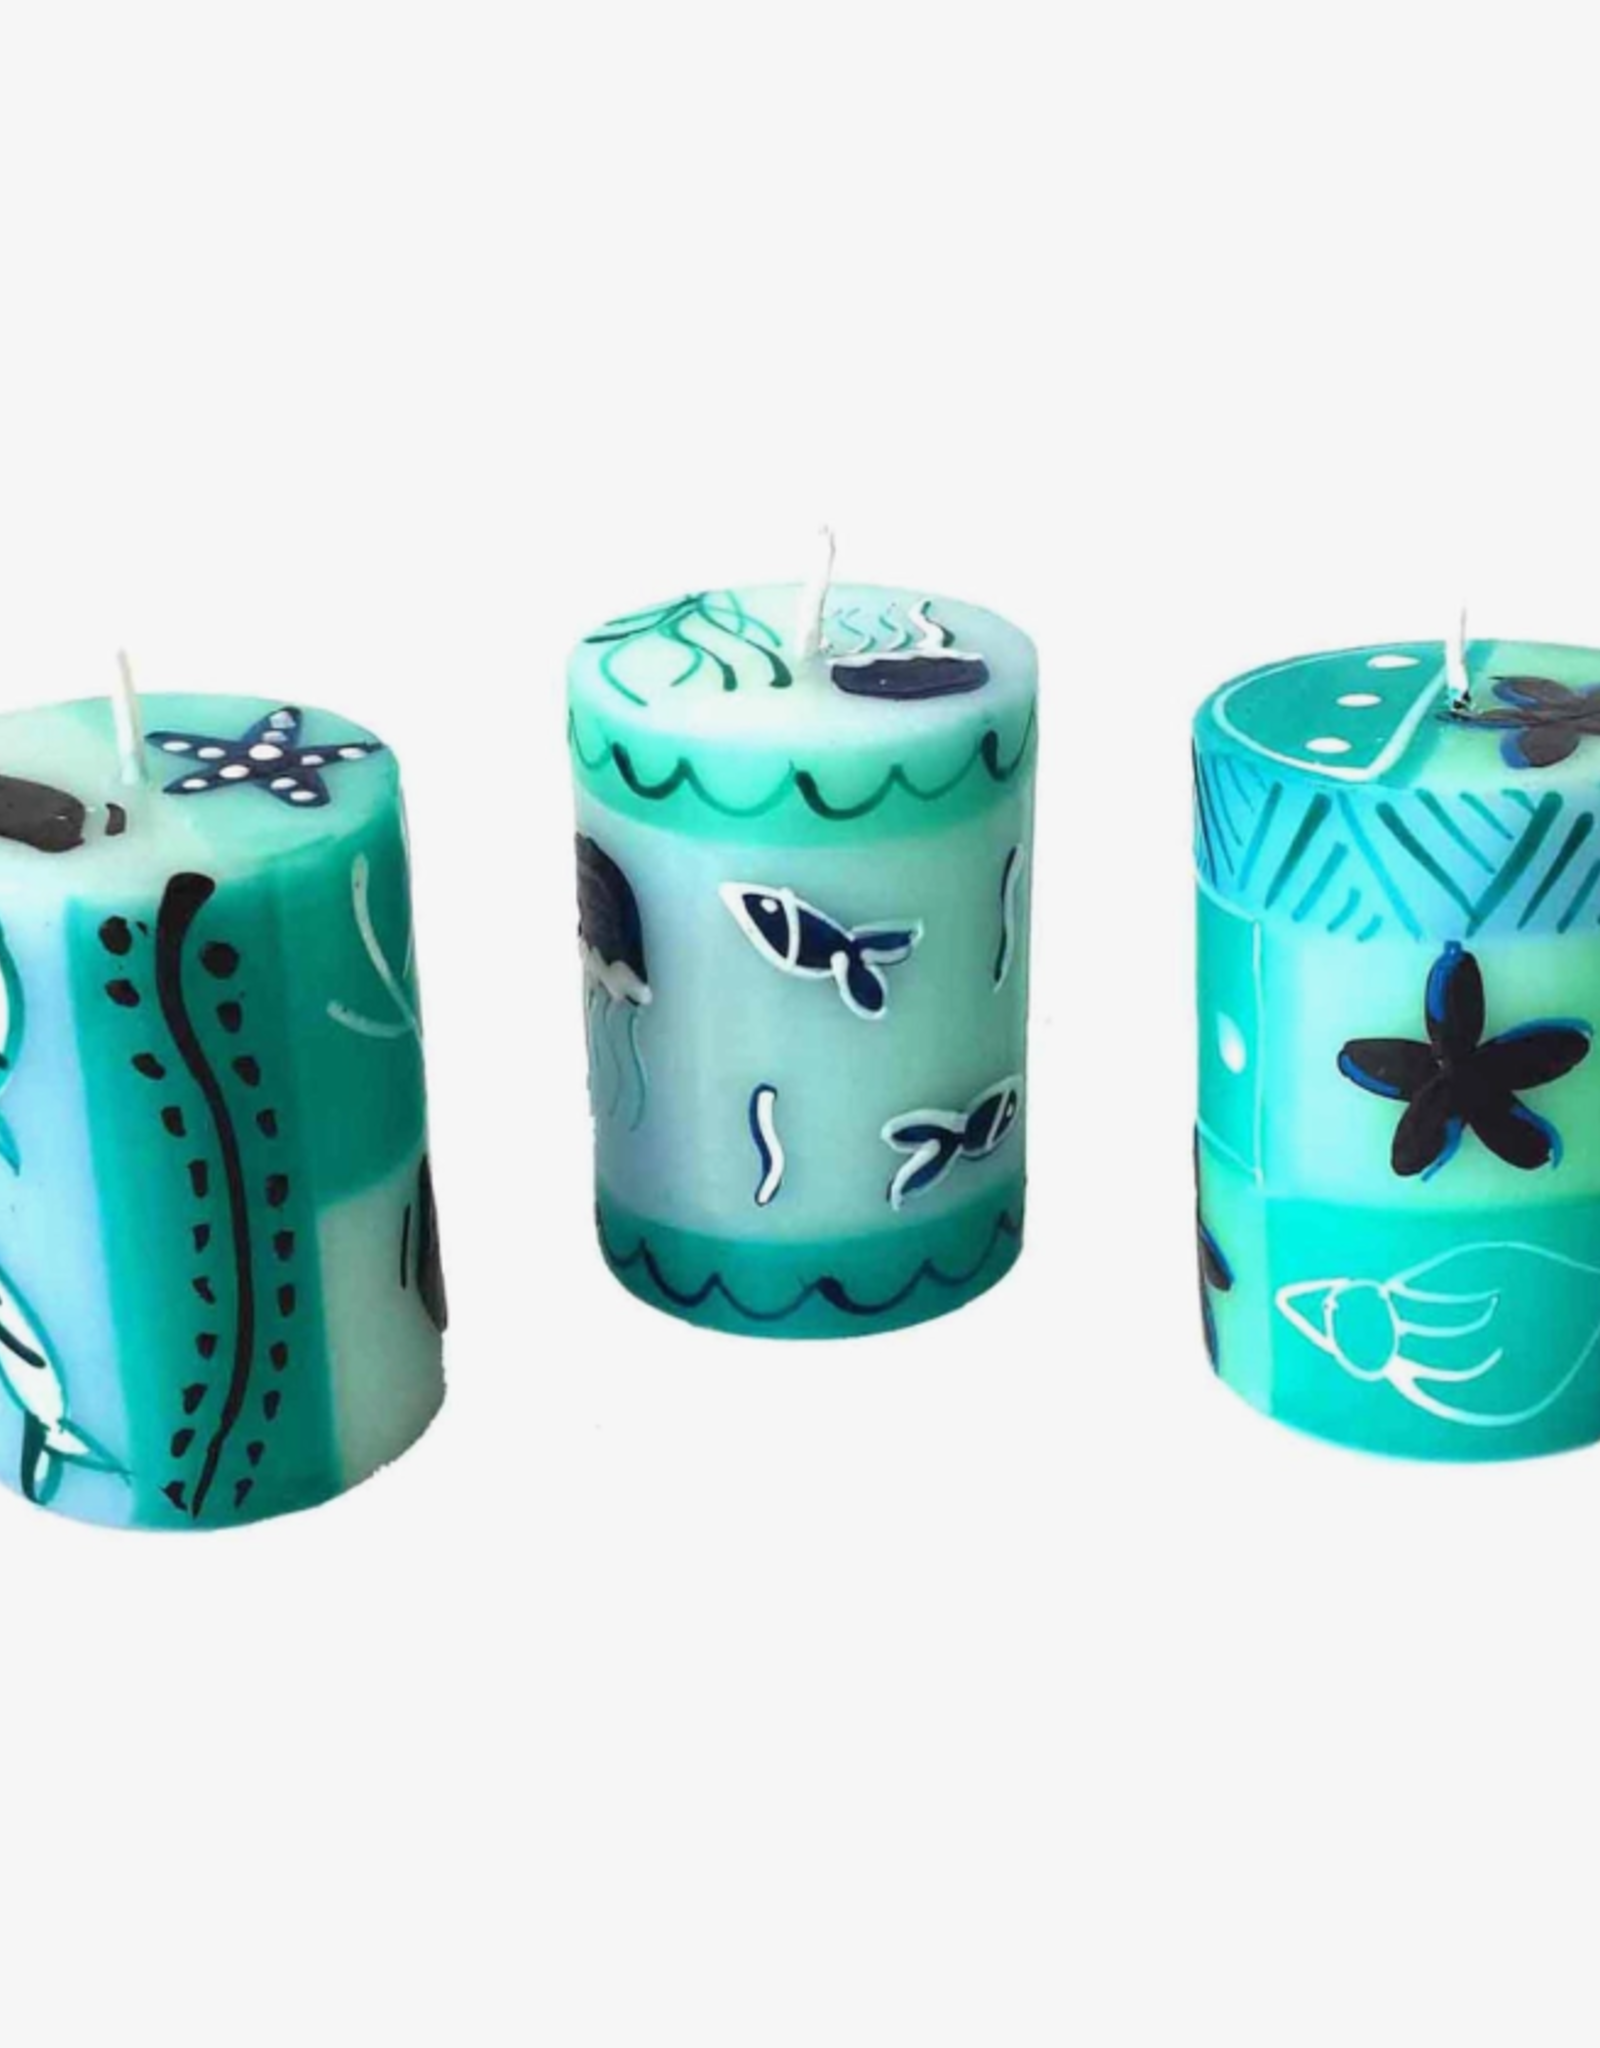 Global Crafts Samaki Design 2.5" Votive Candle - Set of 3